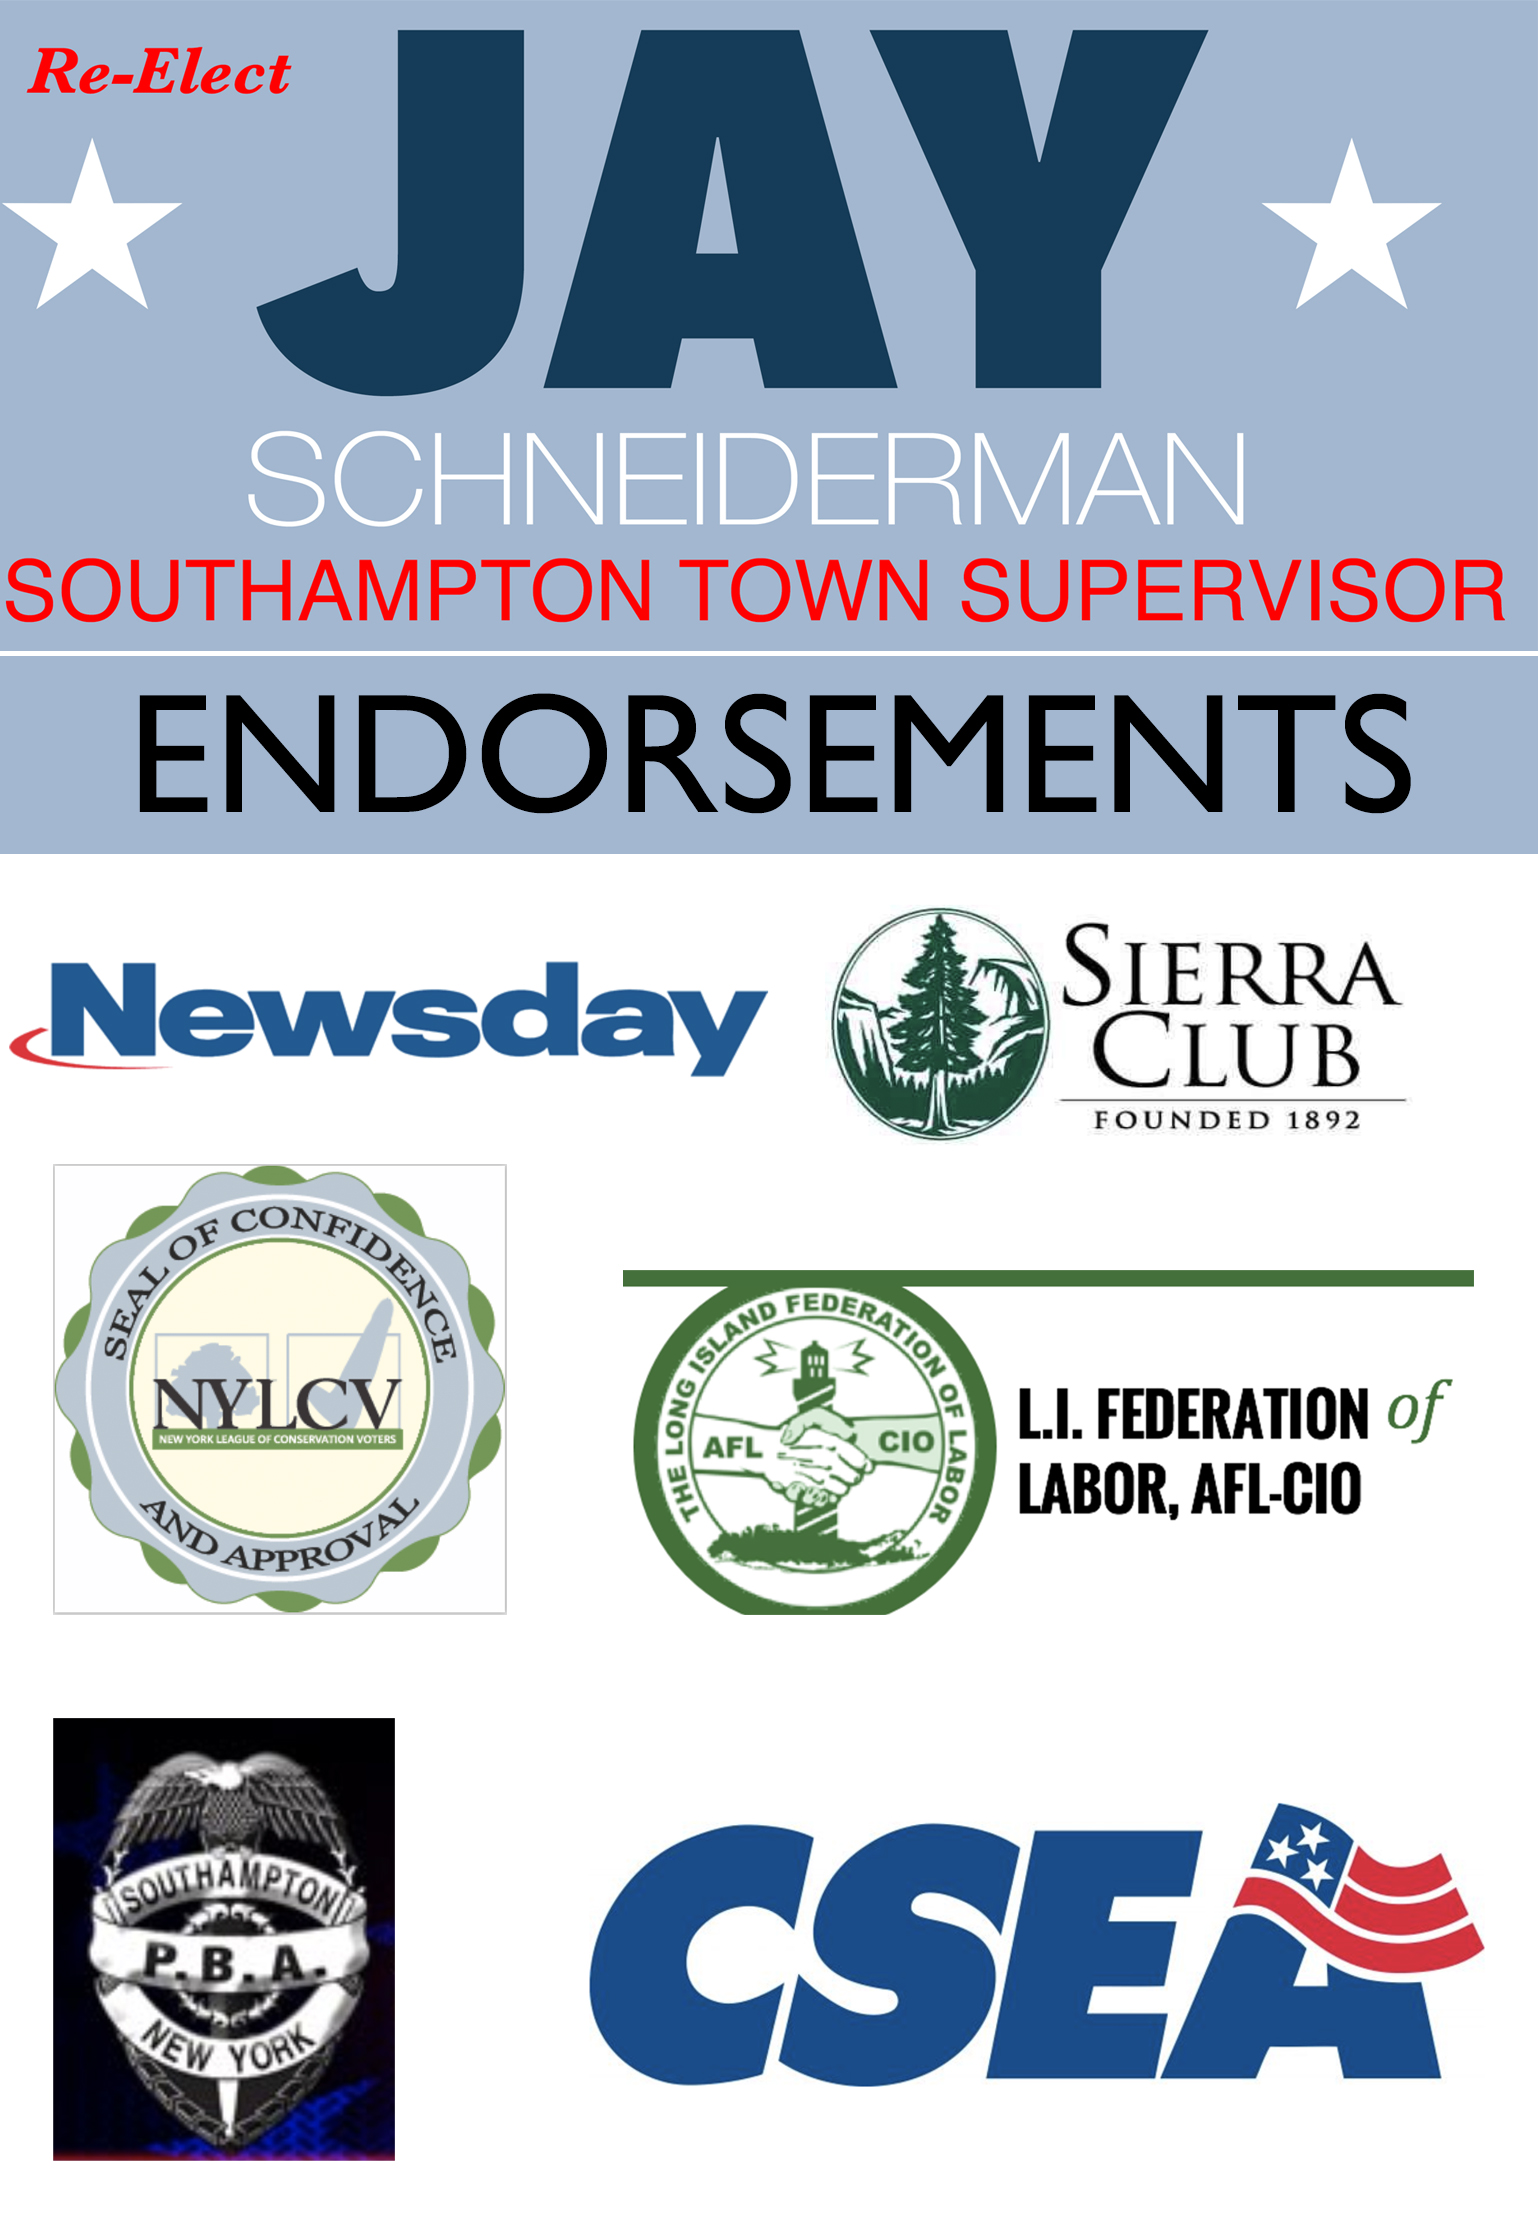 Jay Schneiderman - 2019 endorsements: Newsday, Sierra Club, AFL/CIO, NYCLV, Southampton PBC, CSEA